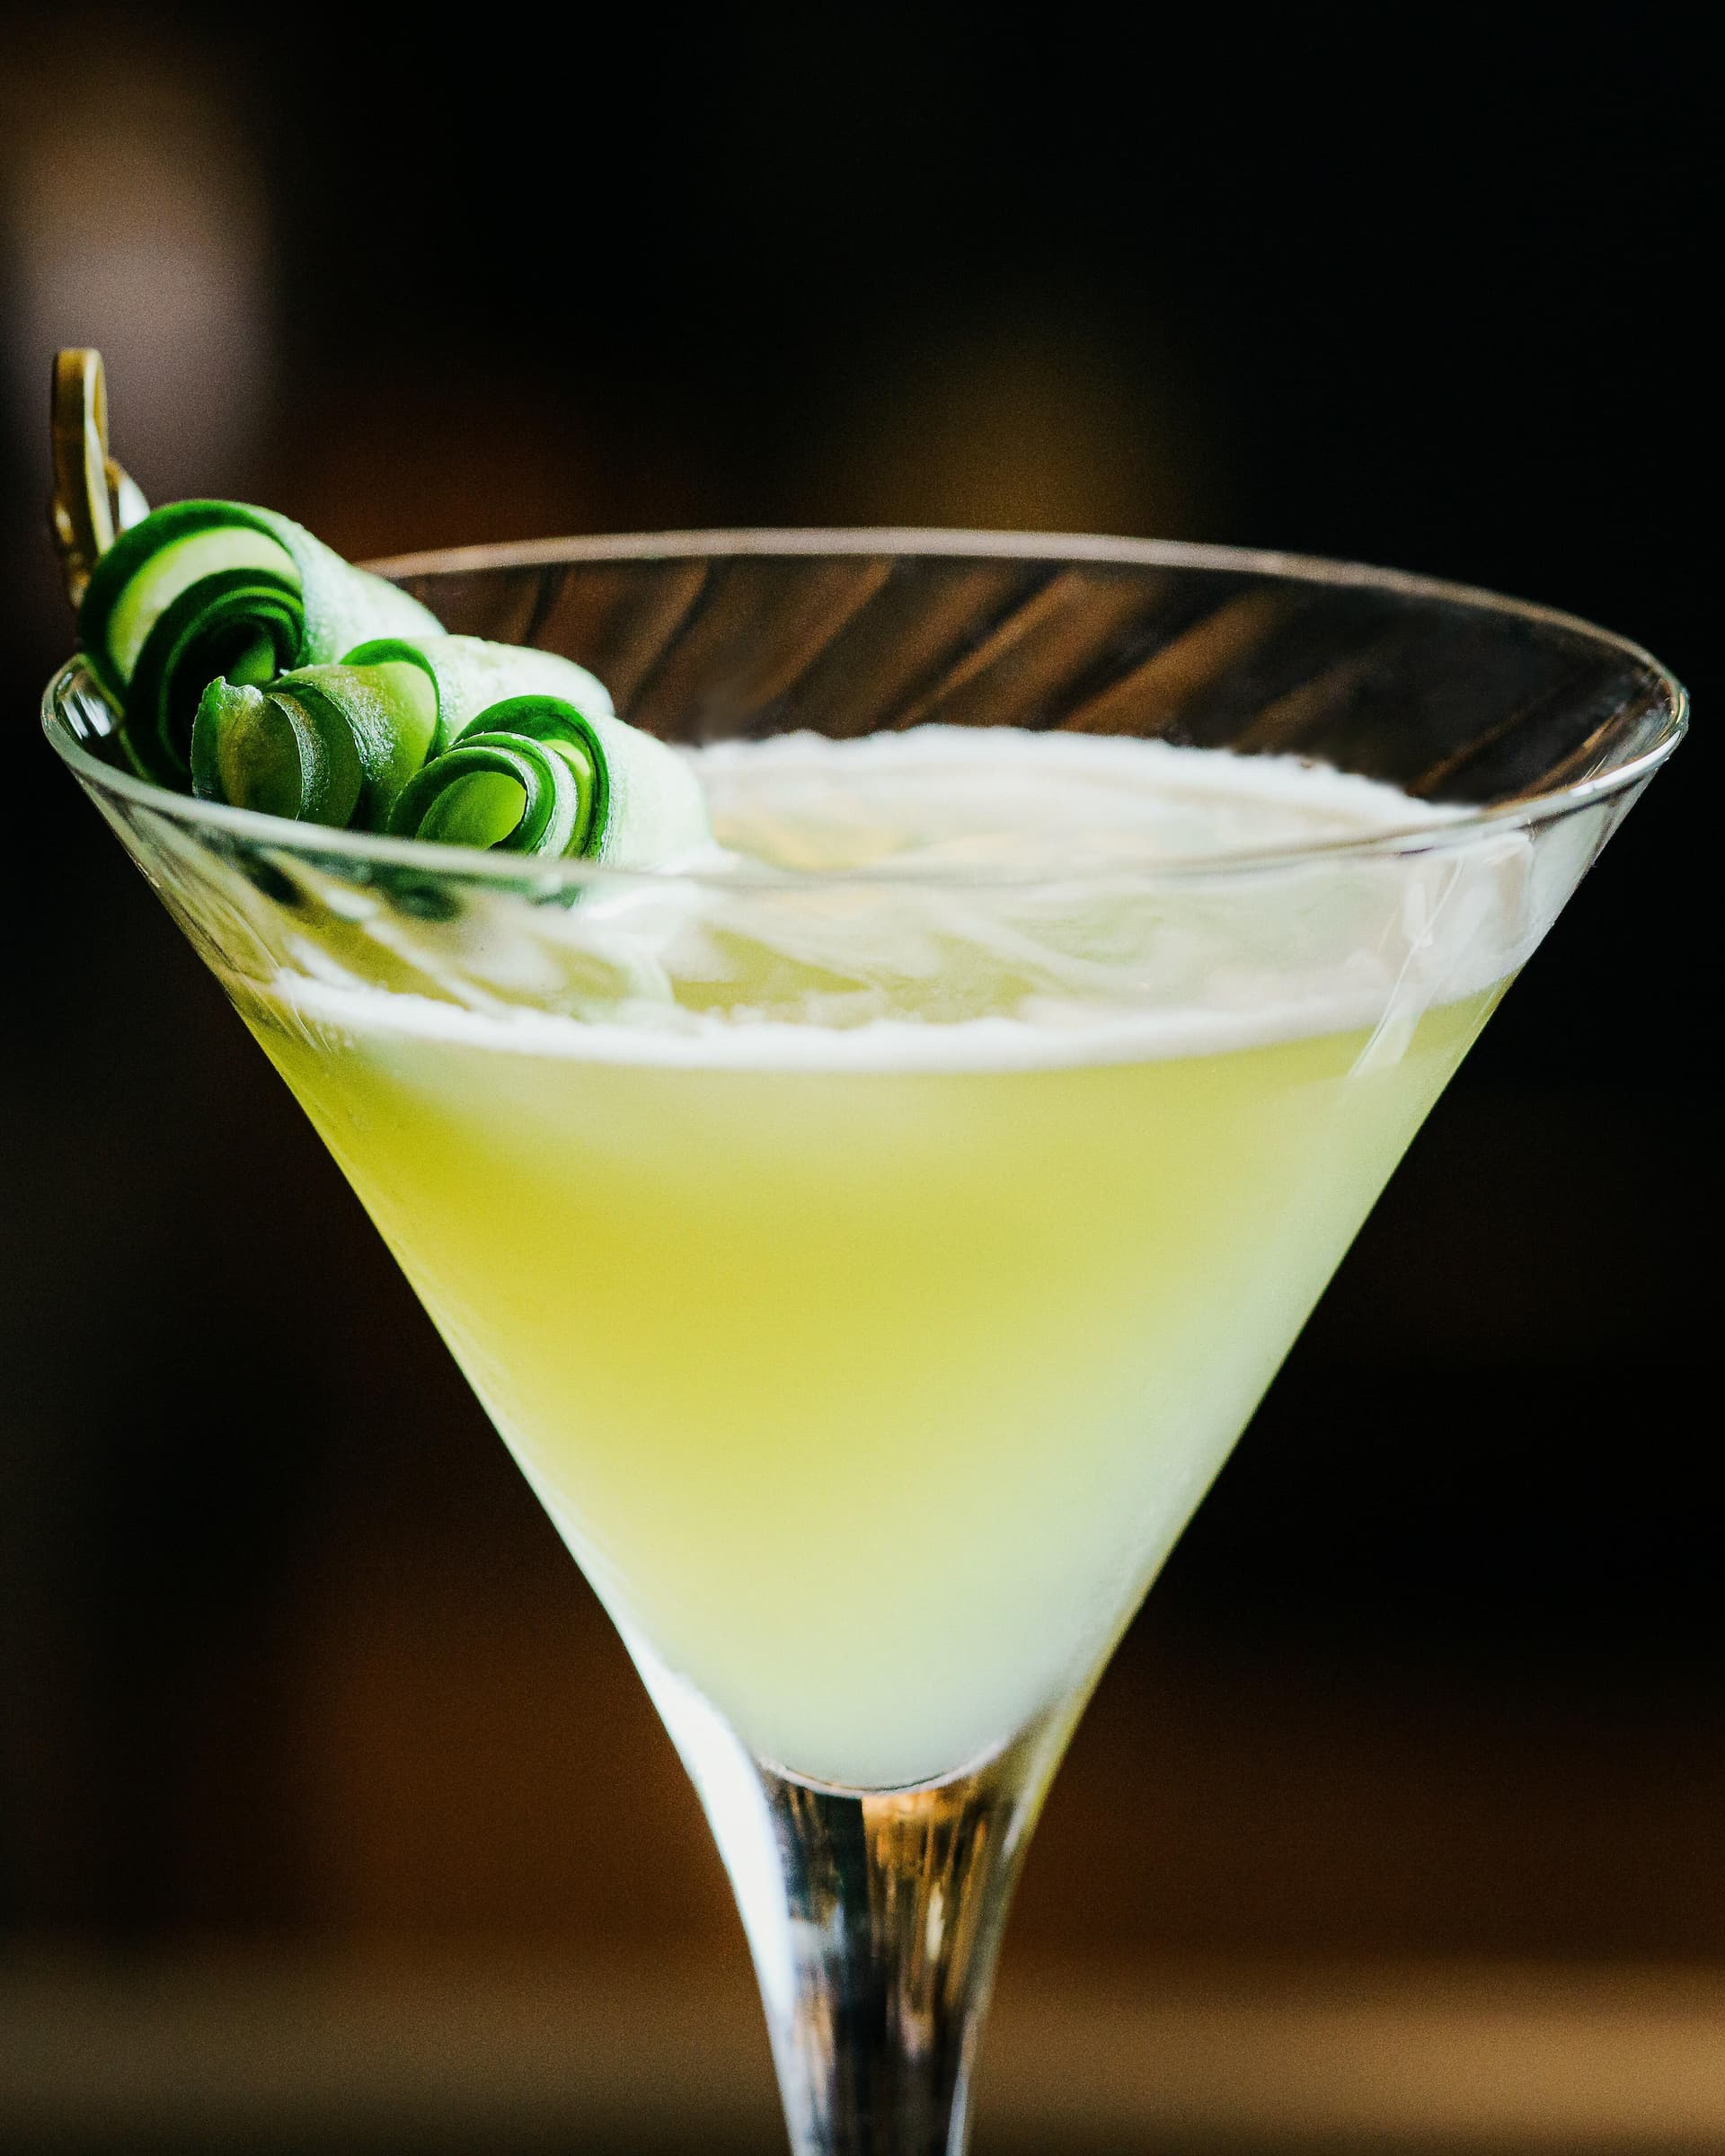 Cucumber dill martini cocktail